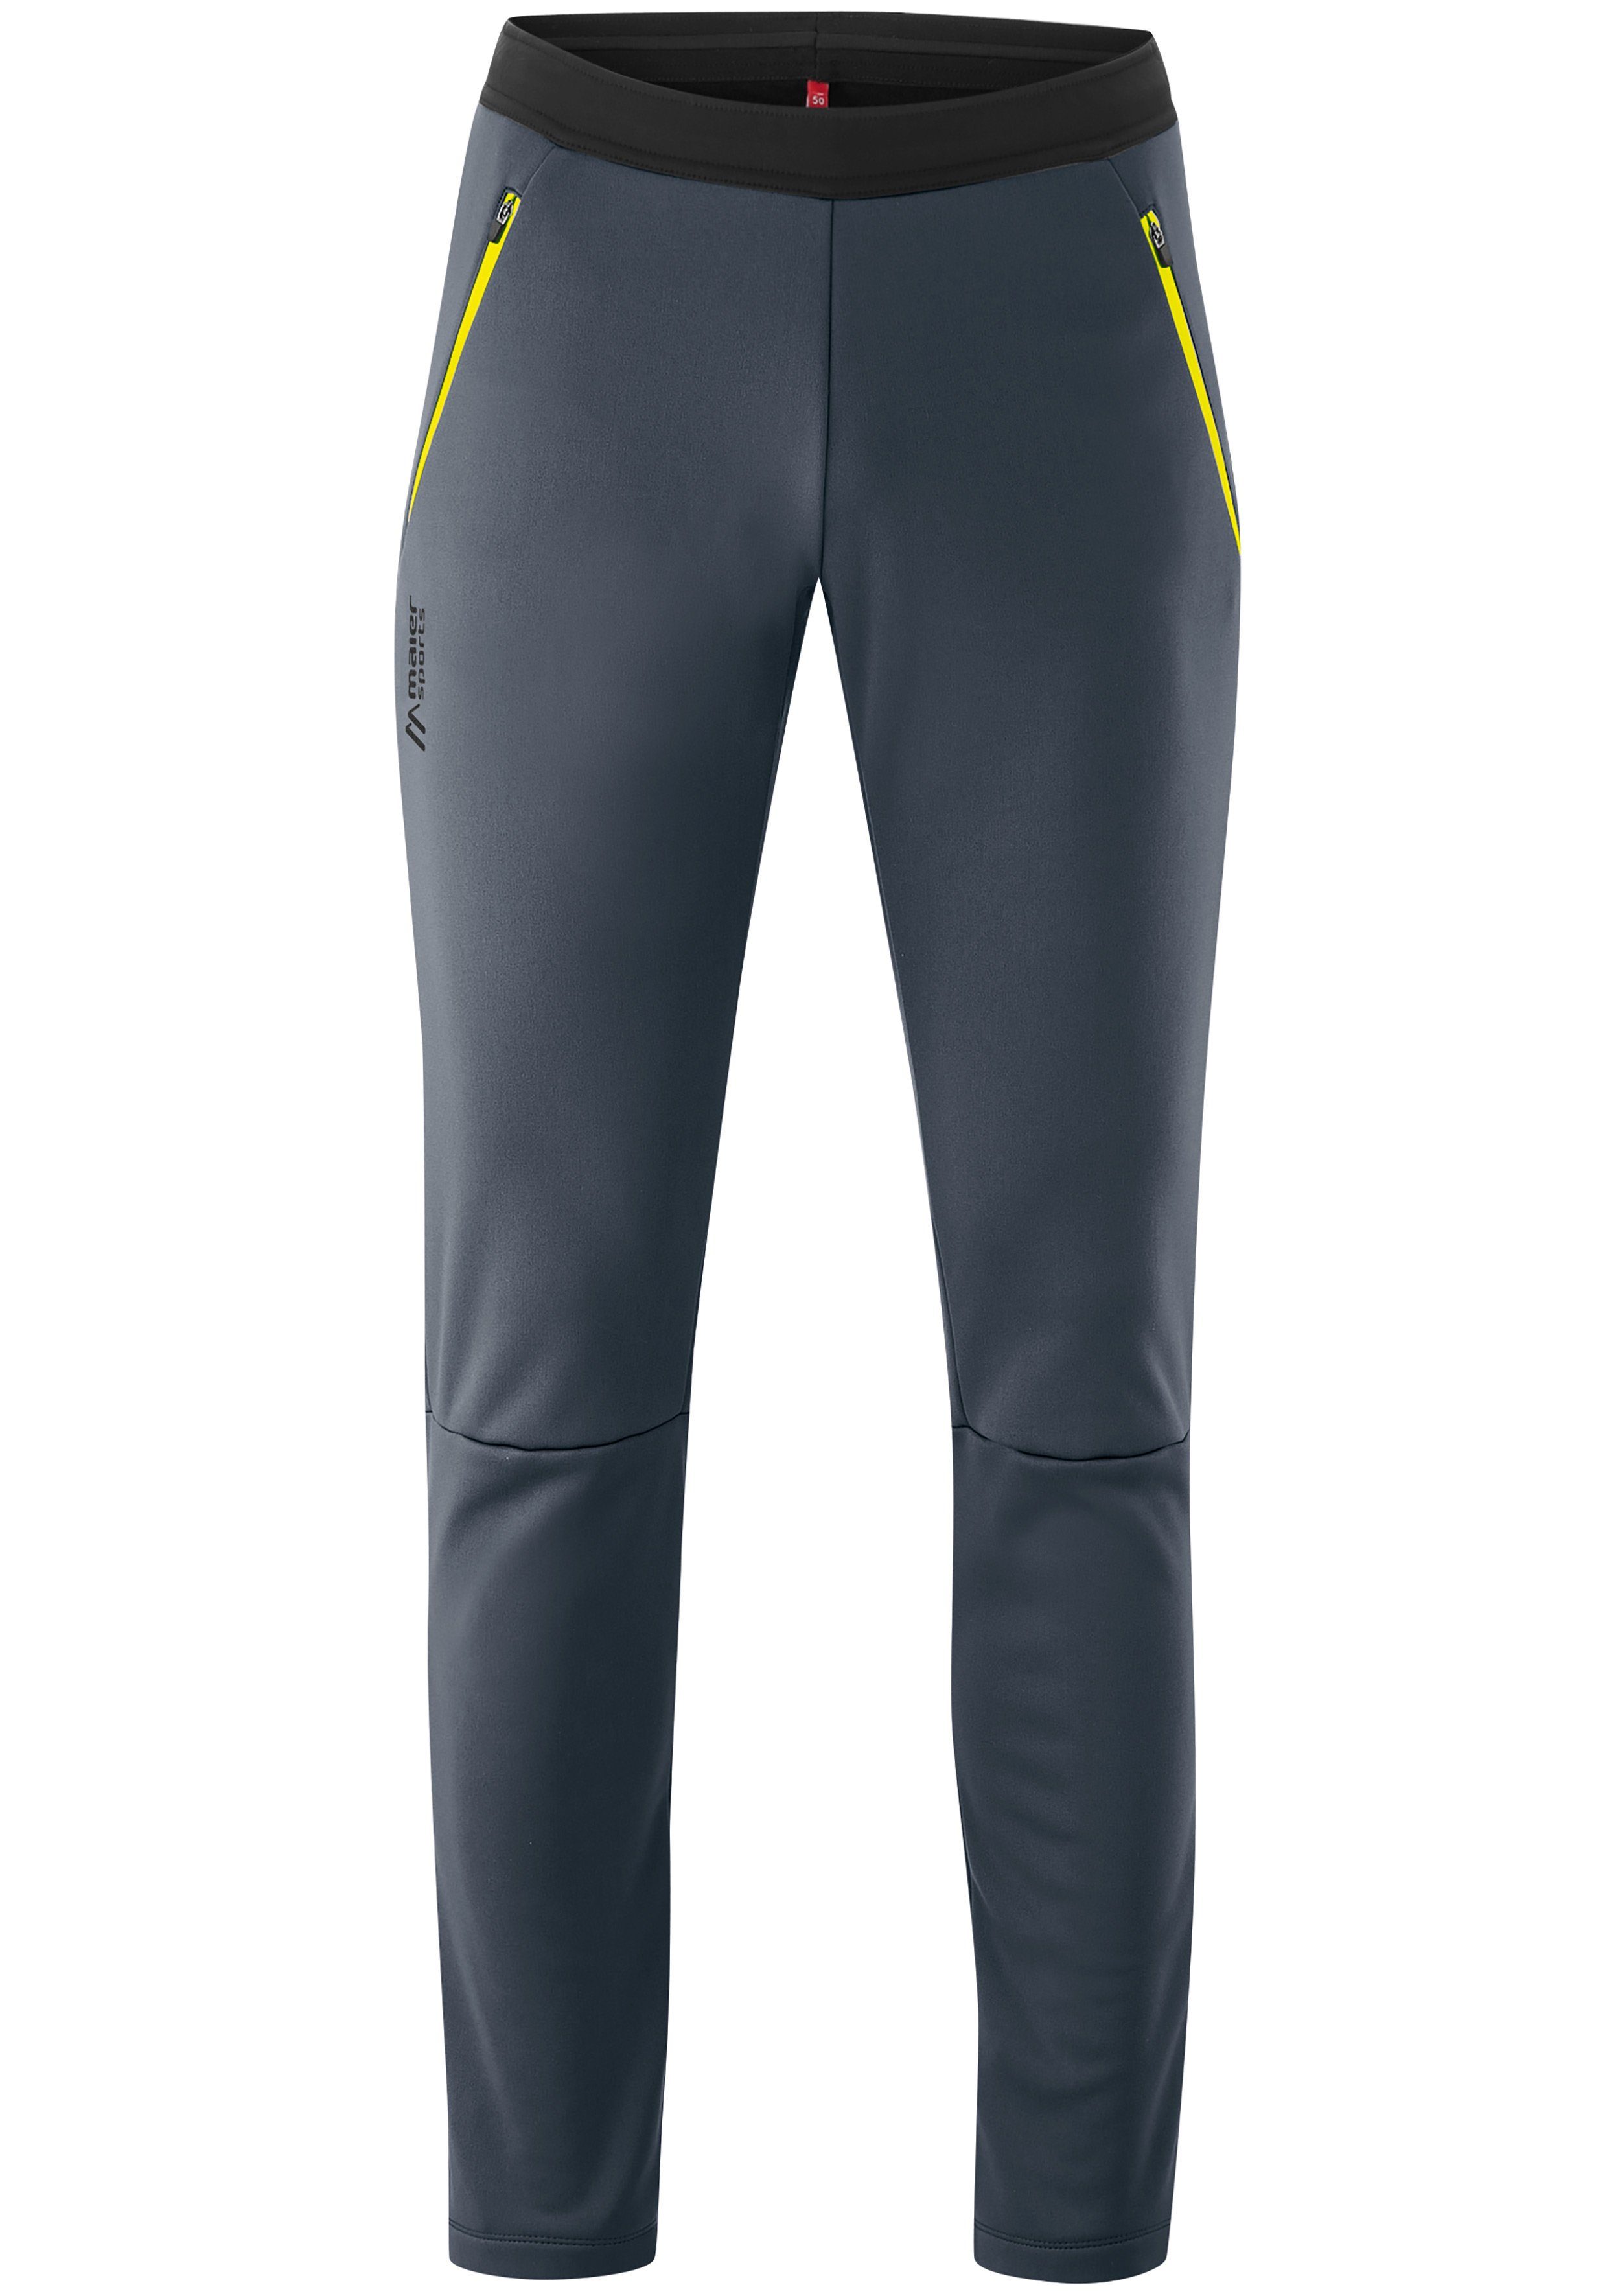 Maier Sports Softshellhose Malselv Softshell-Hose in M graublau komfortable modernen Pants Schnitt Slim-Fit